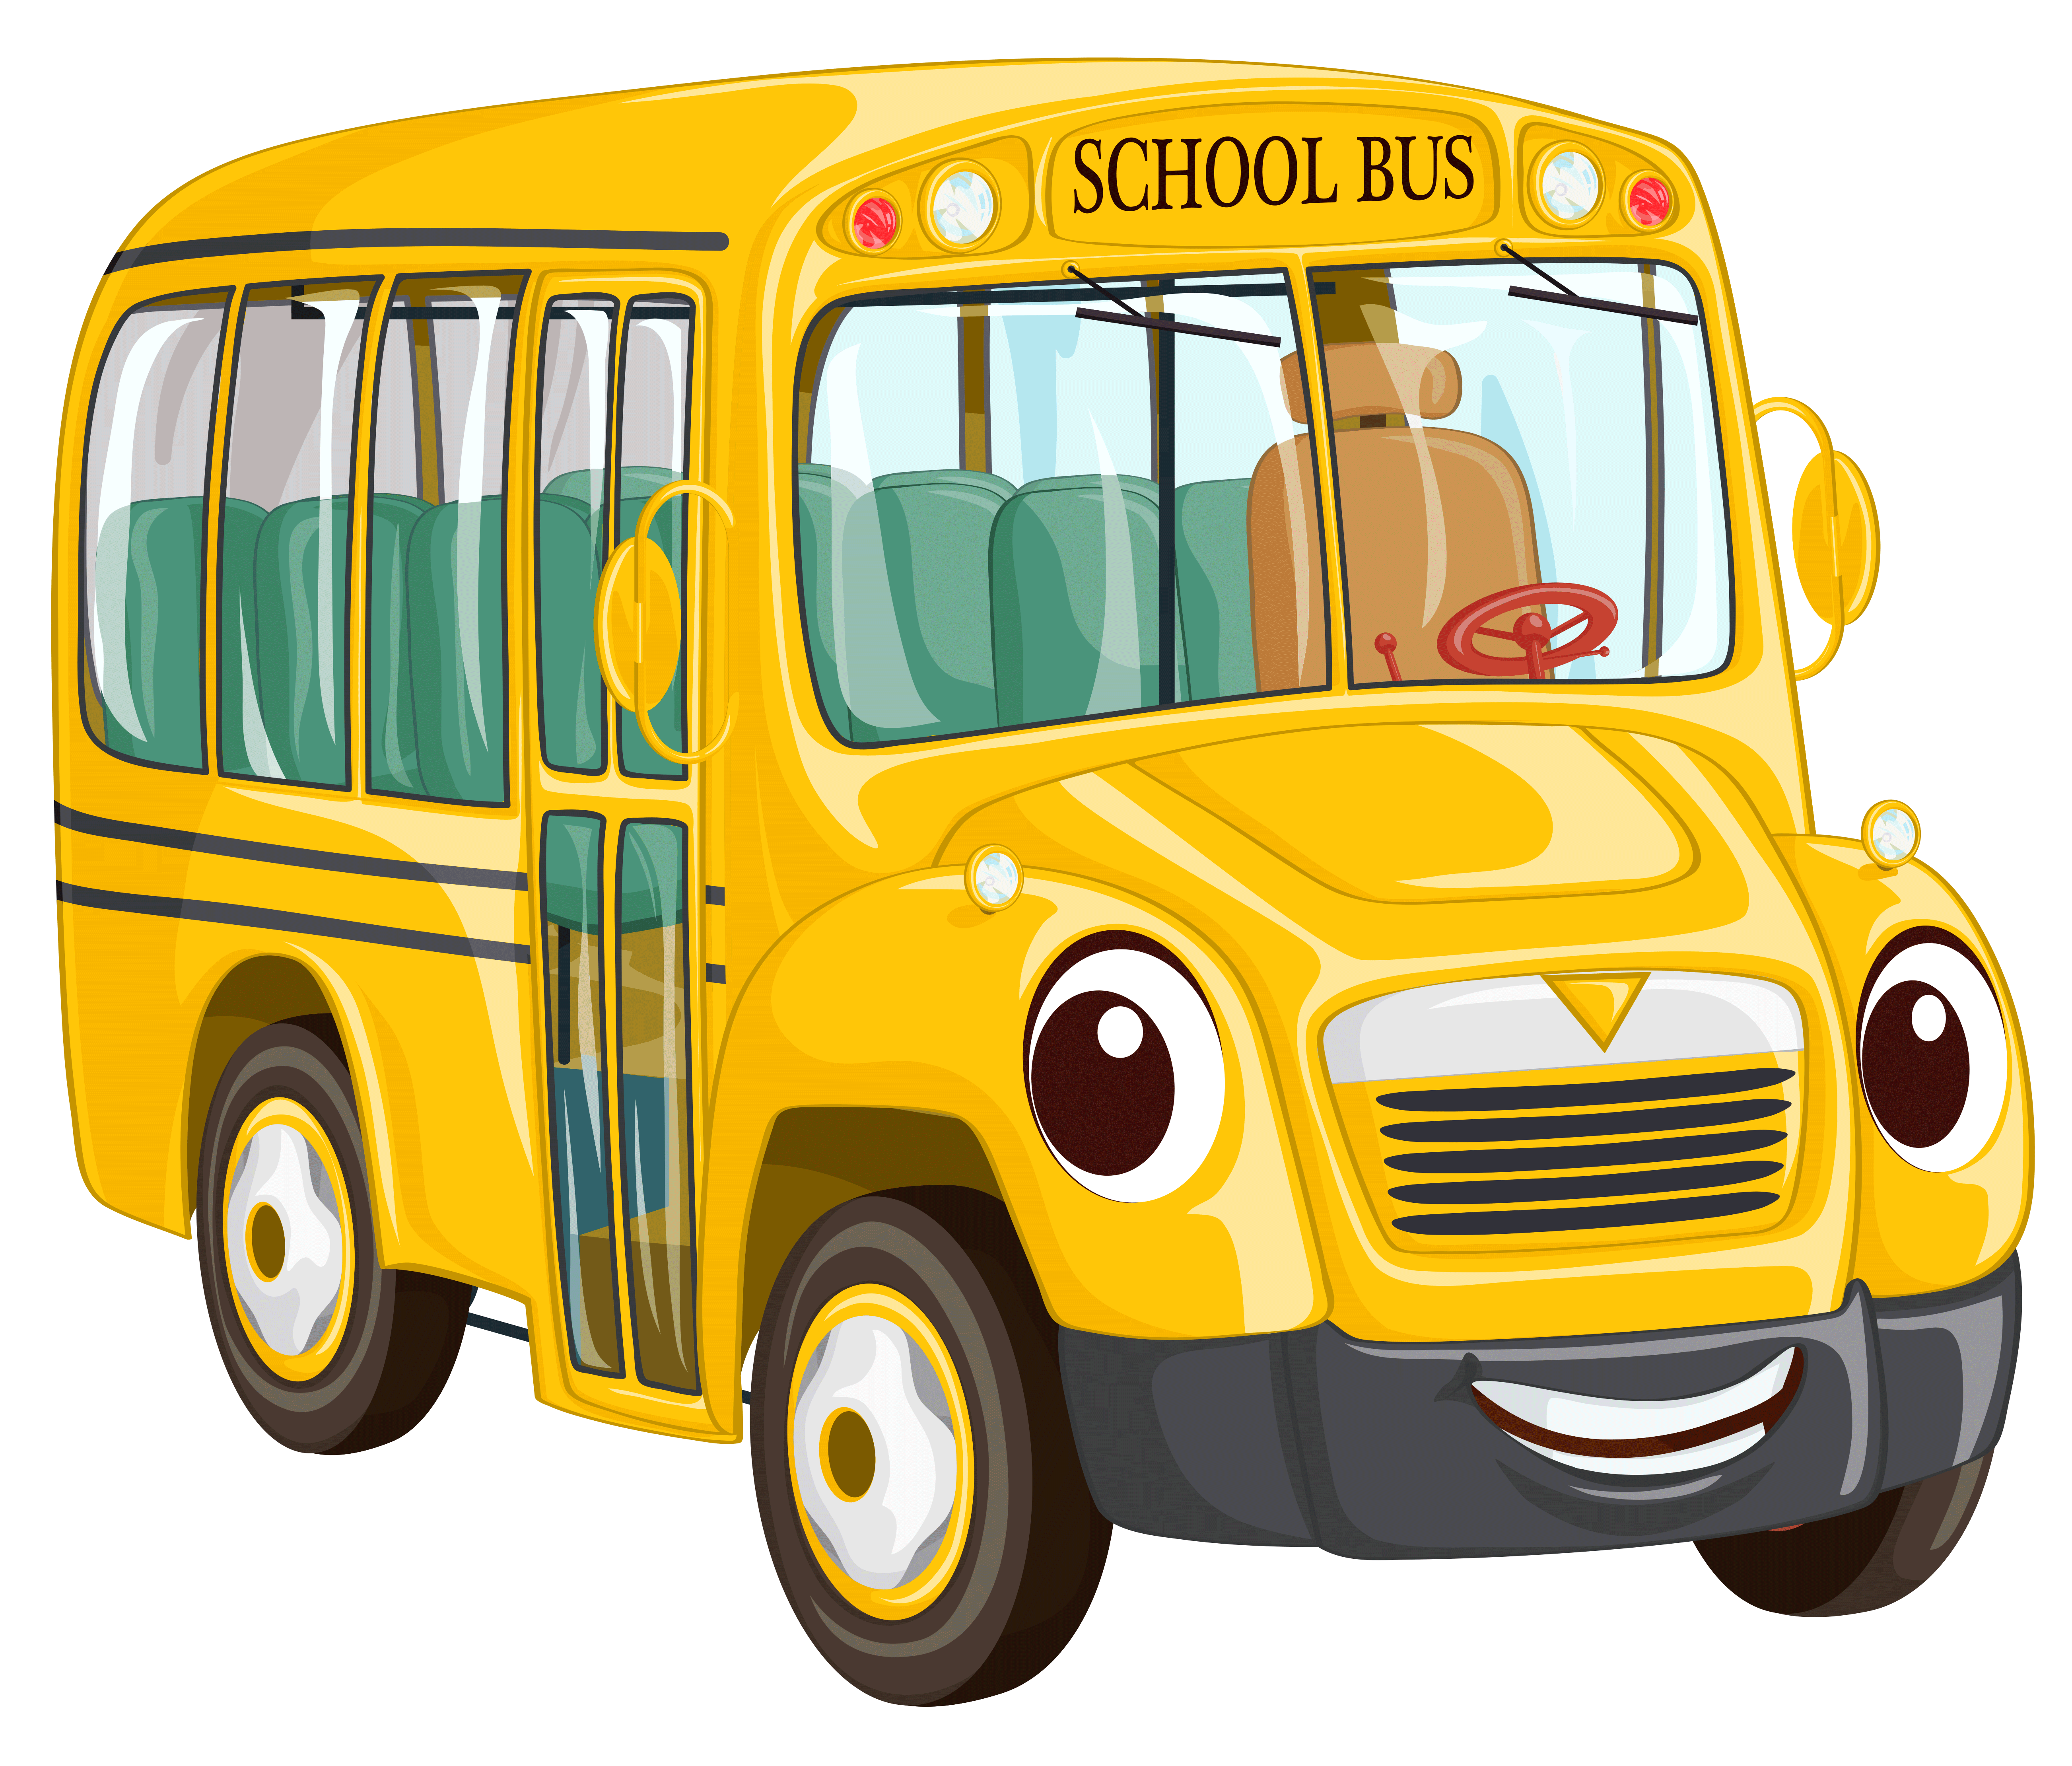 Frog On School Bus PNG - 163875